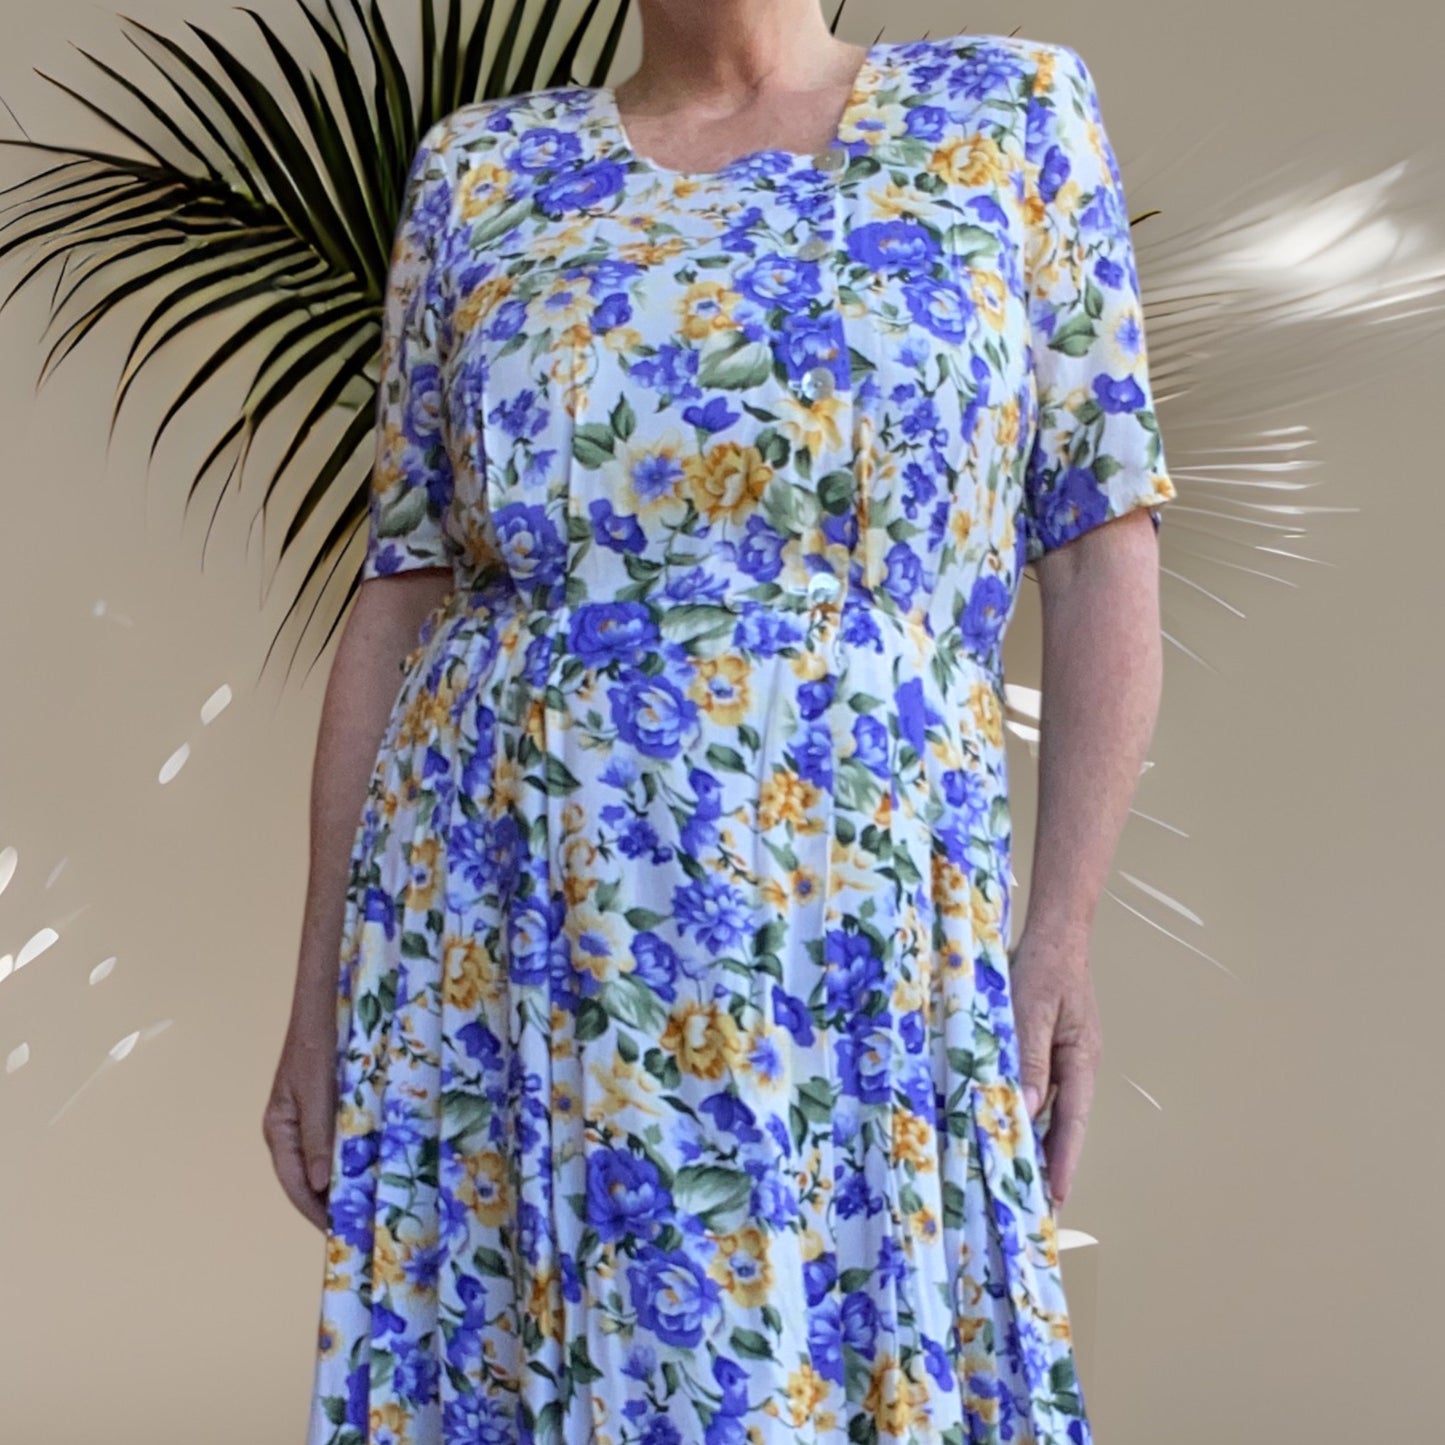 Pansy Floral Dress Size 14-16